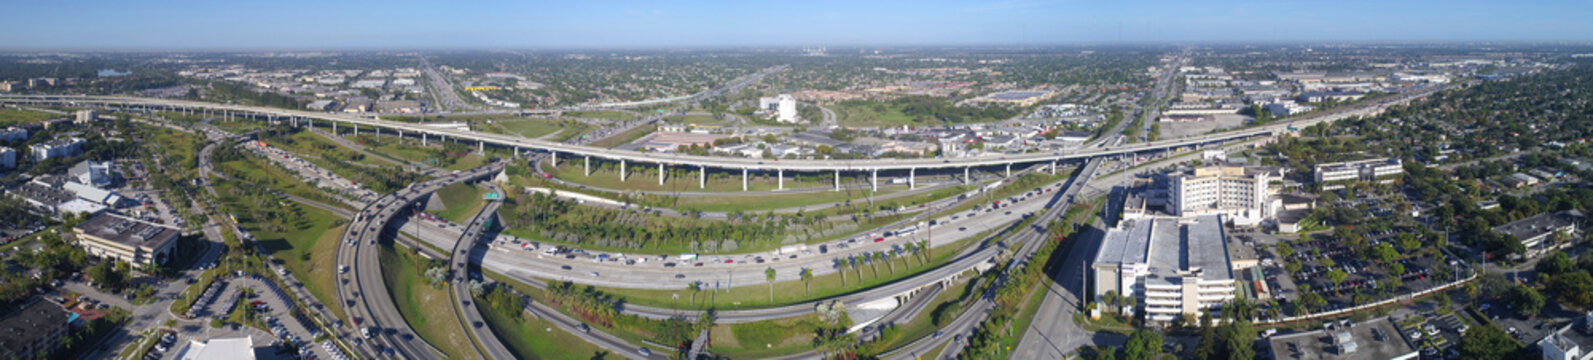 Aerial image of the Golden Glades Interchange Miami FL